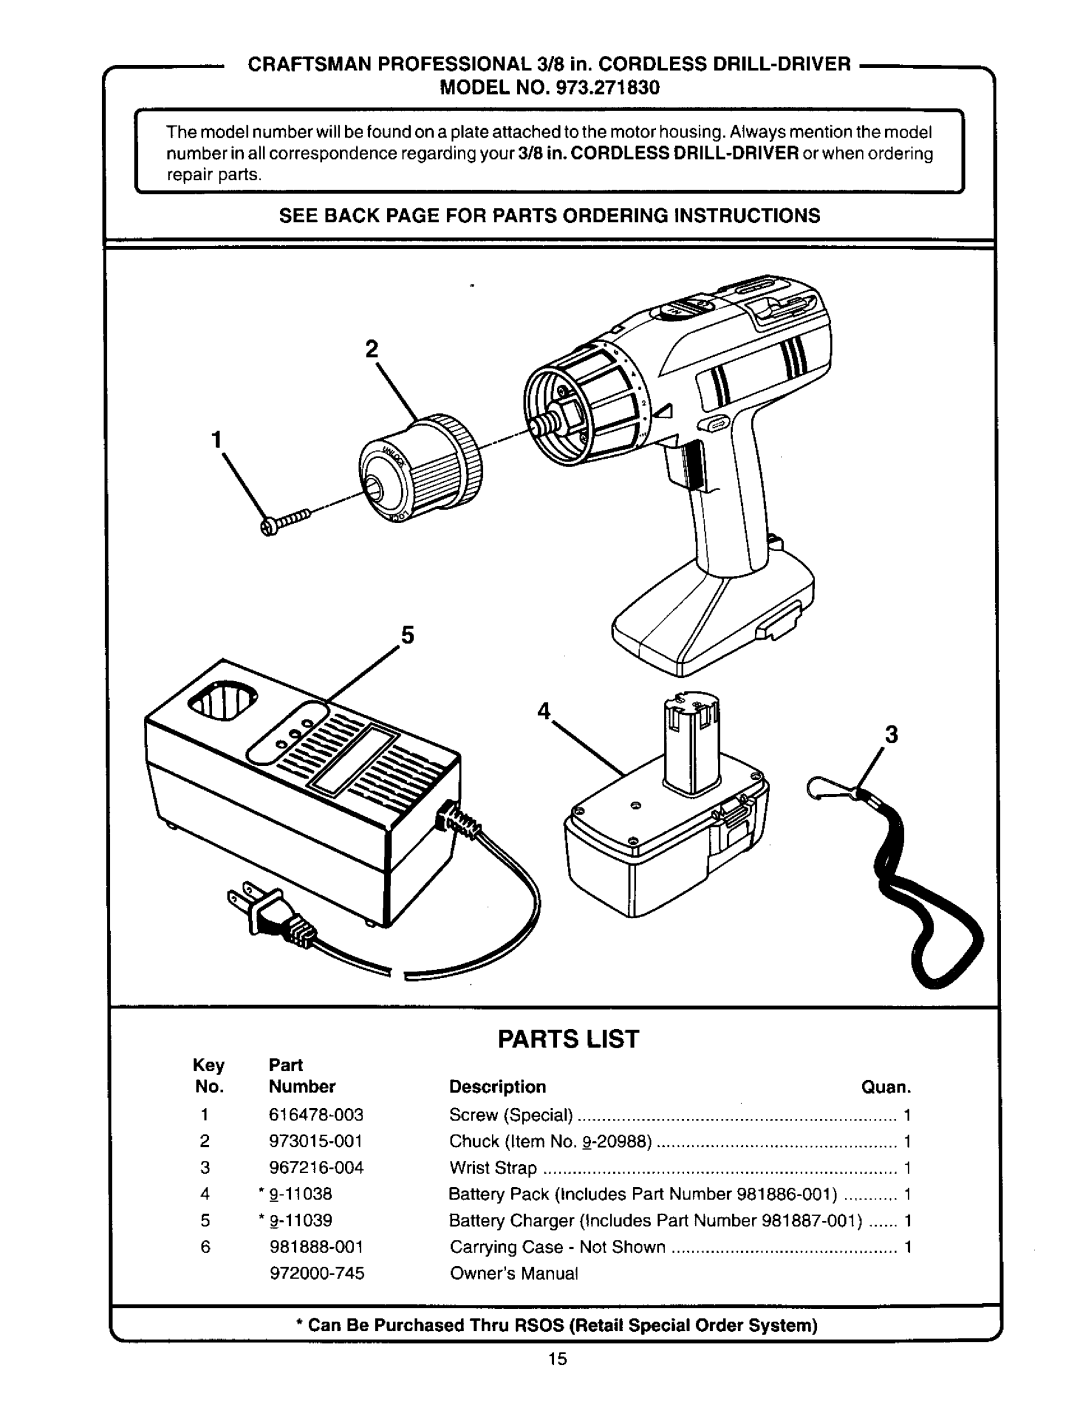 Craftsman 973.271830 owner manual Parts List 